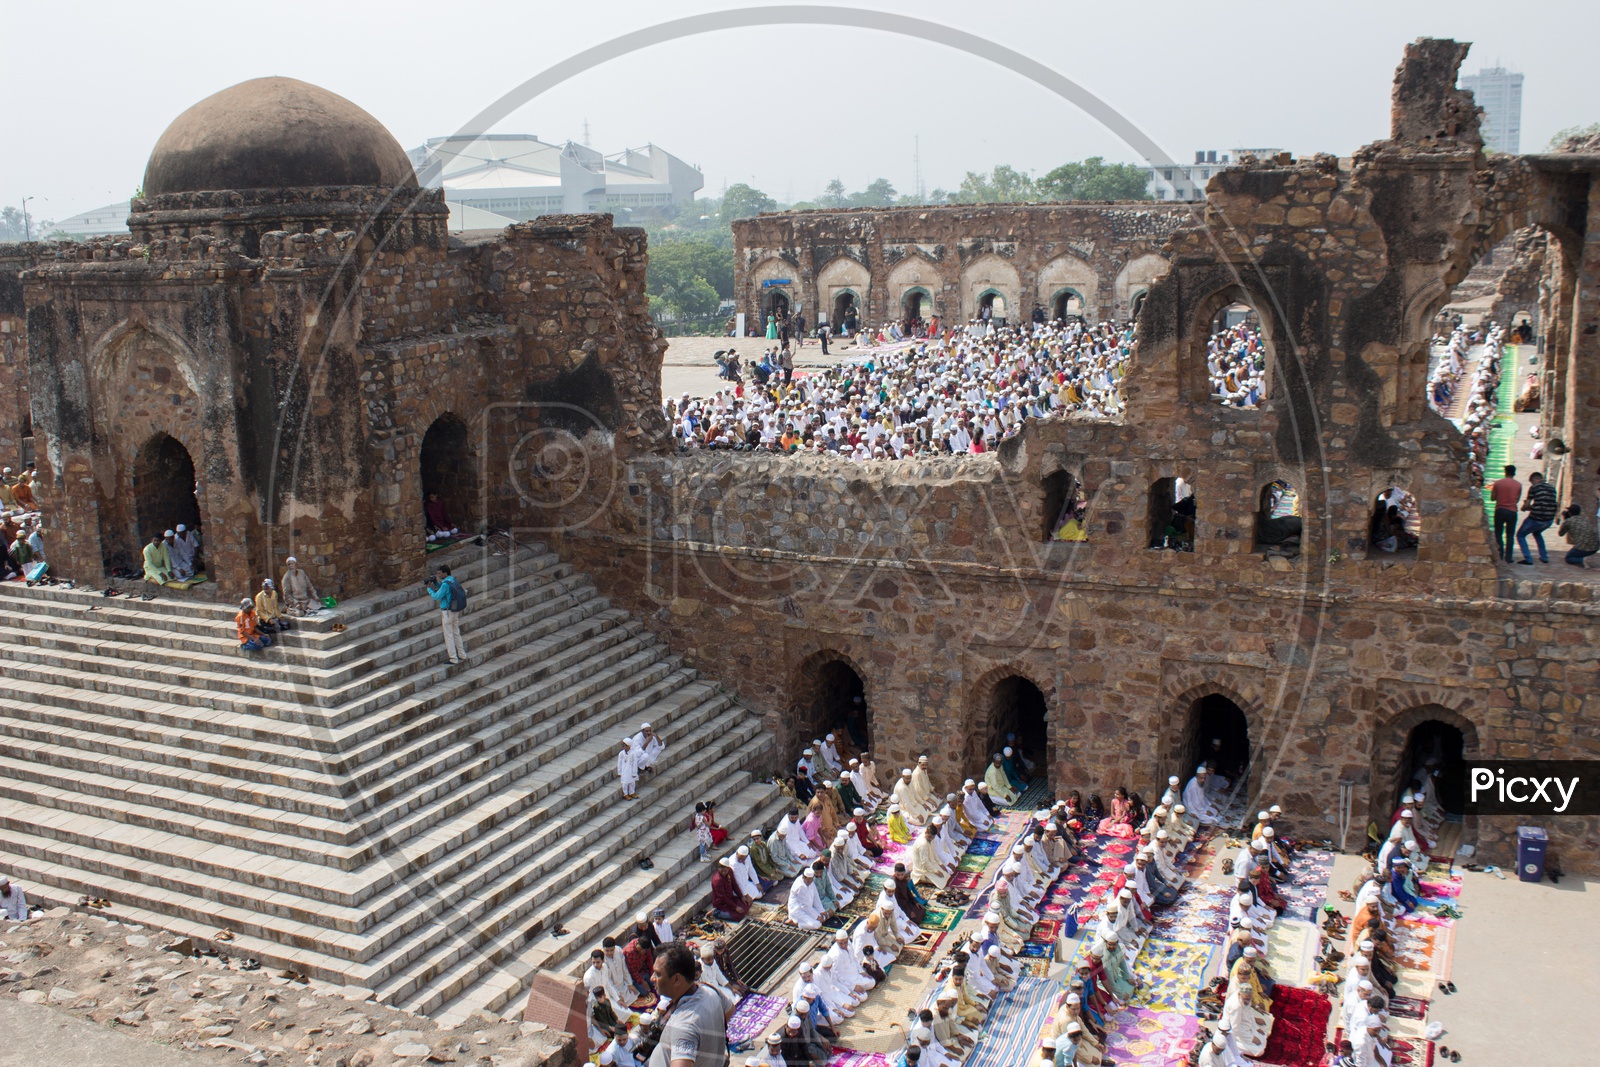 Muslims offering namaz prayer on Eid at Jami Masjid, Feroz Shah Kotla fort in Delhi